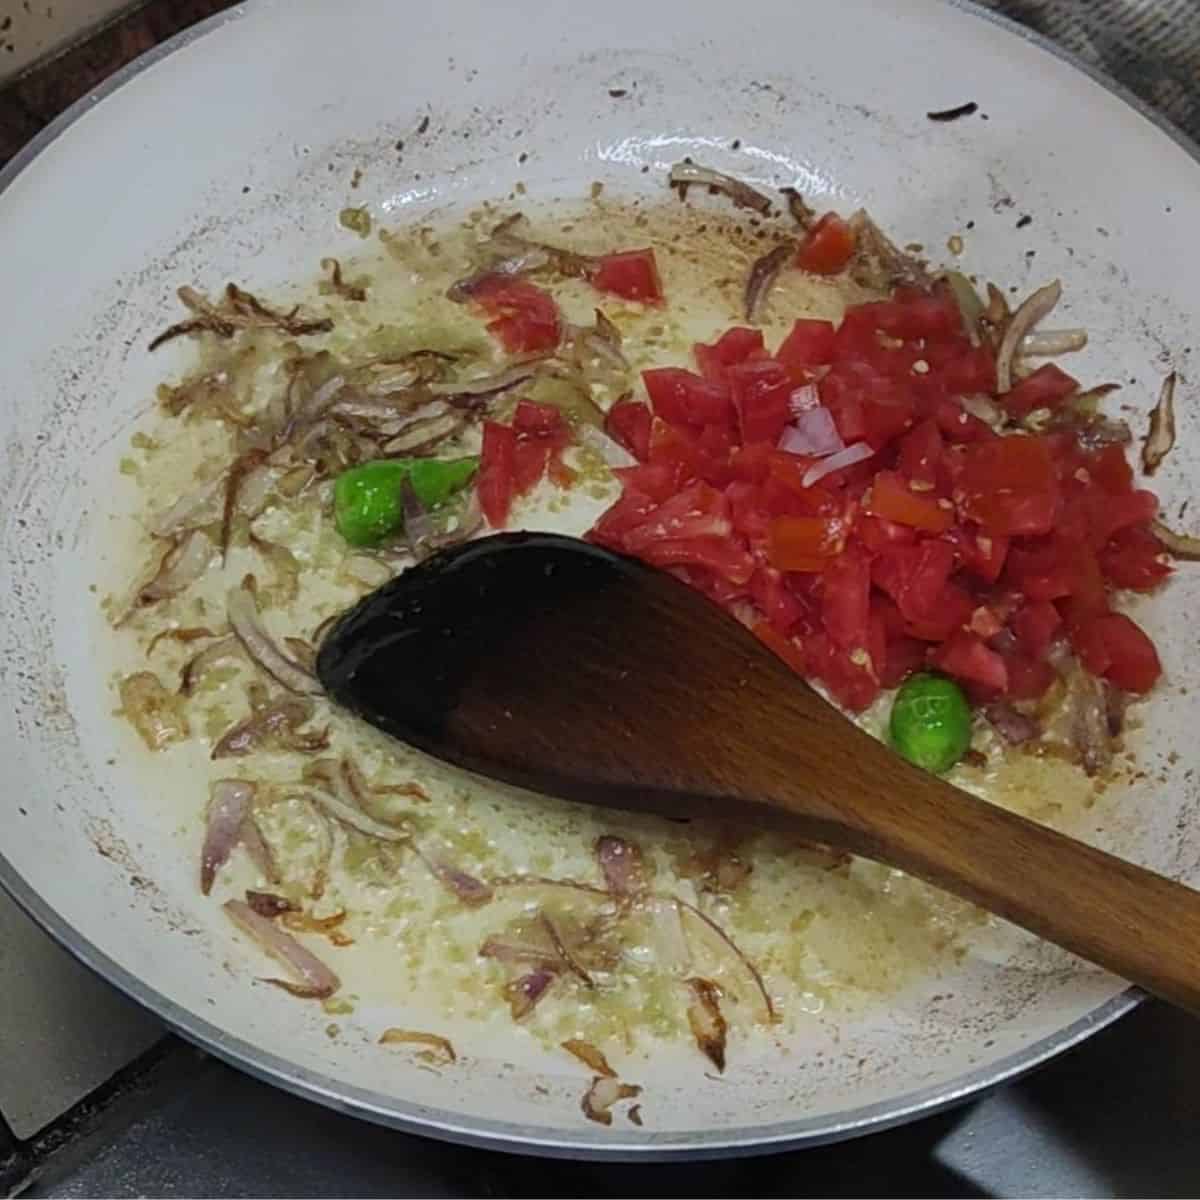 Add tomatoes & Green Chillies in pan to make rajma masala